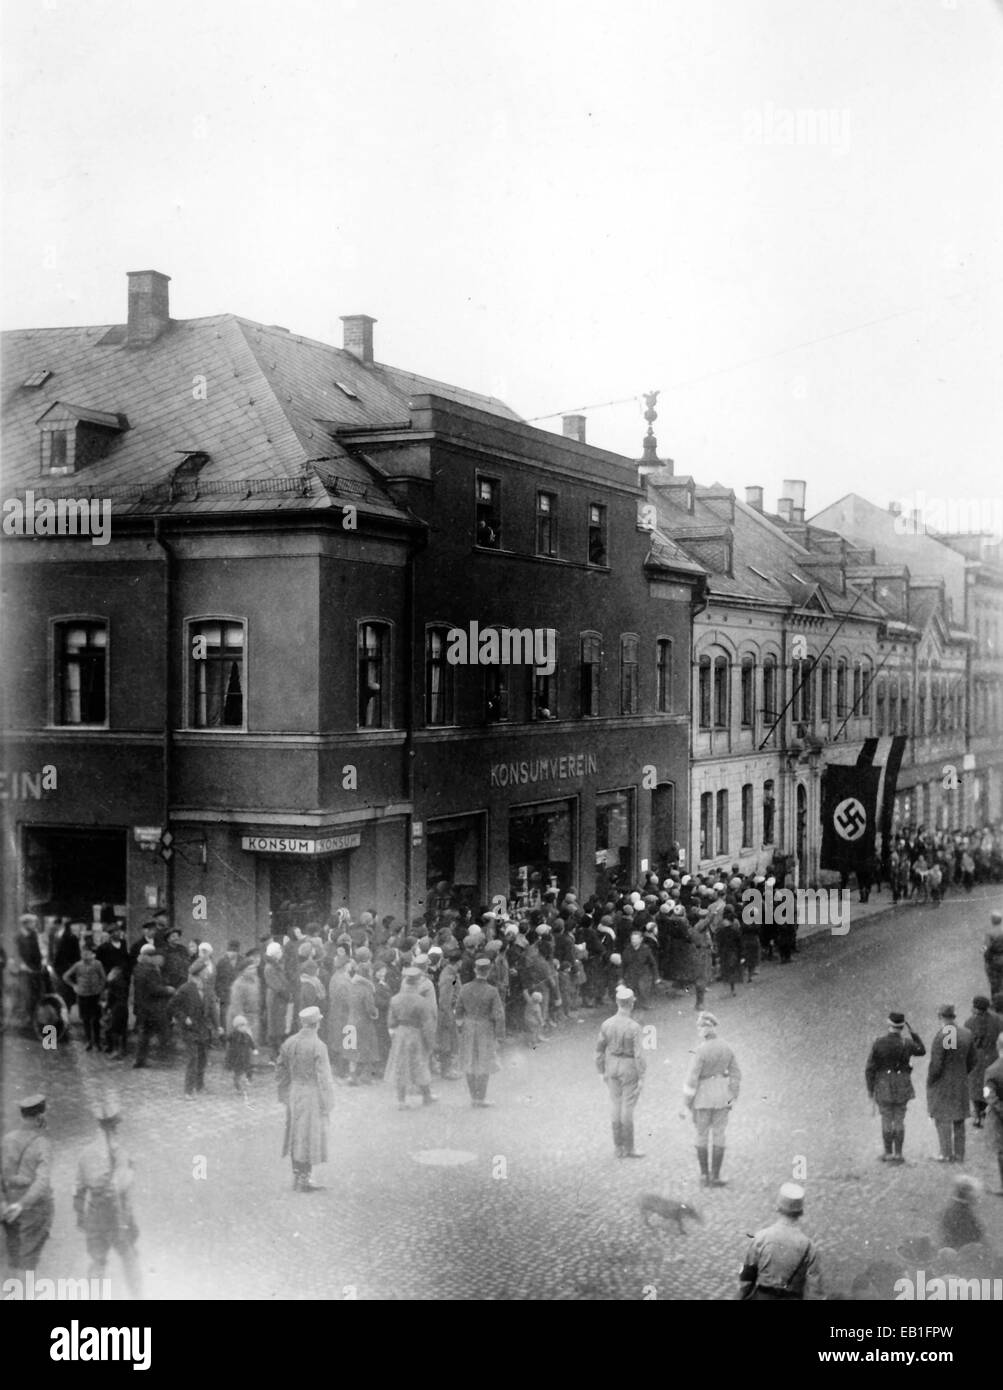 The swastica is raised outside of the Reich Bank Building in Falkenstein near Auerbach, Germany, 05 March 1933. Fotoarchiv für Zeitgeschichte - NO WIRE SERVICE Stock Photo